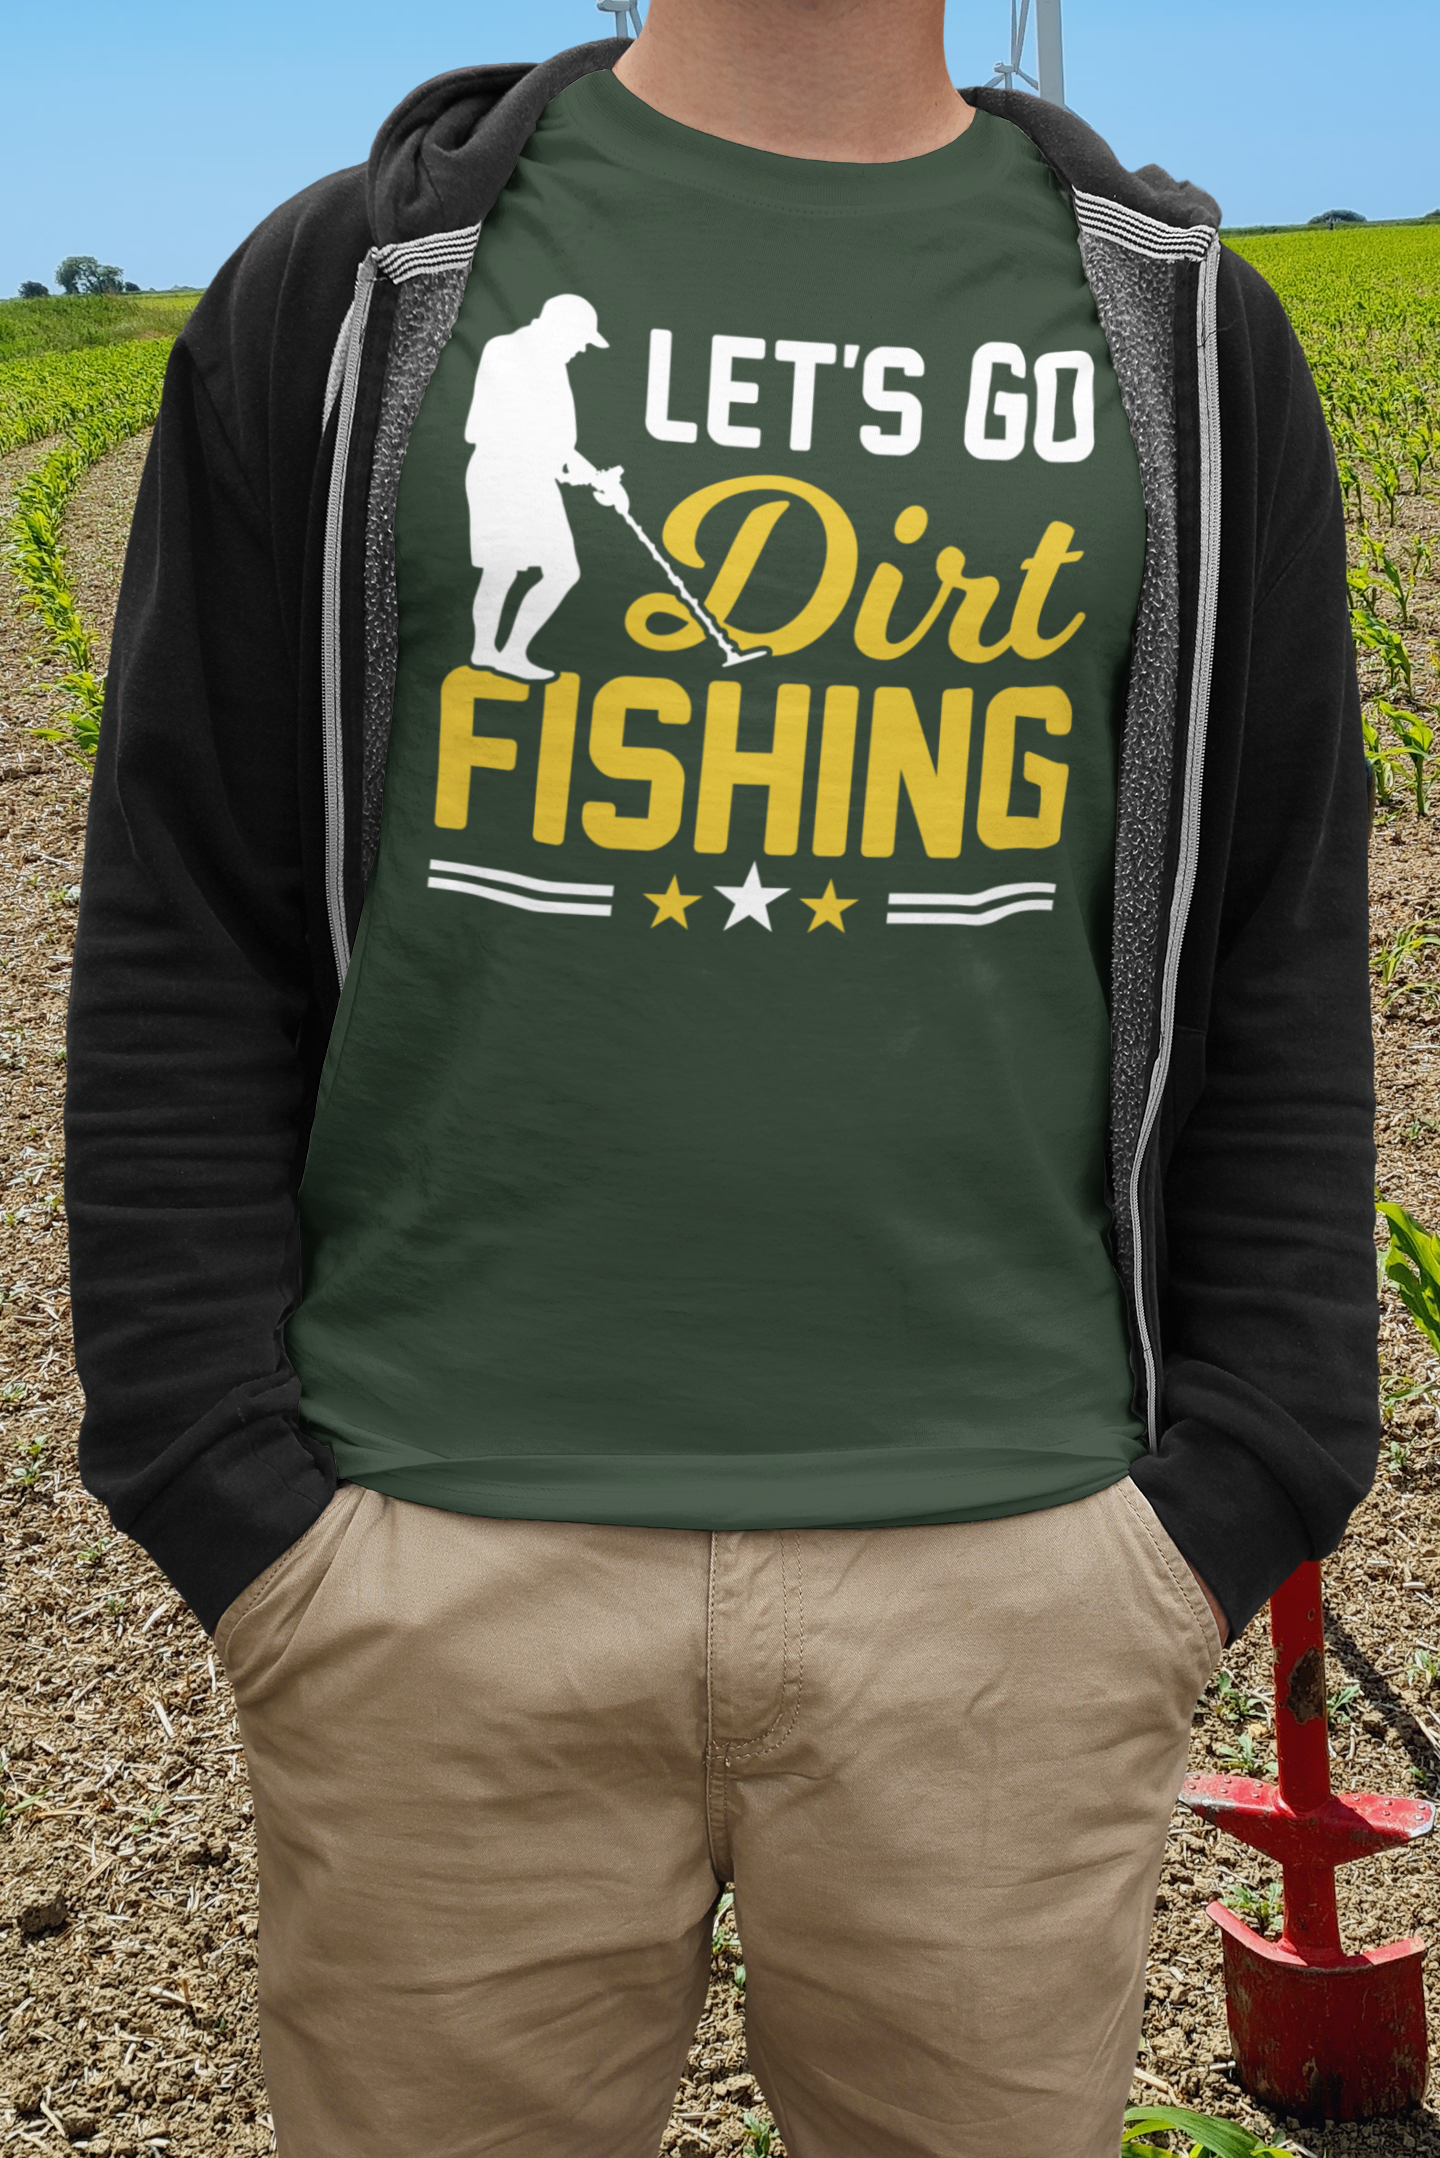 Let's go dirt fishing T-shirt